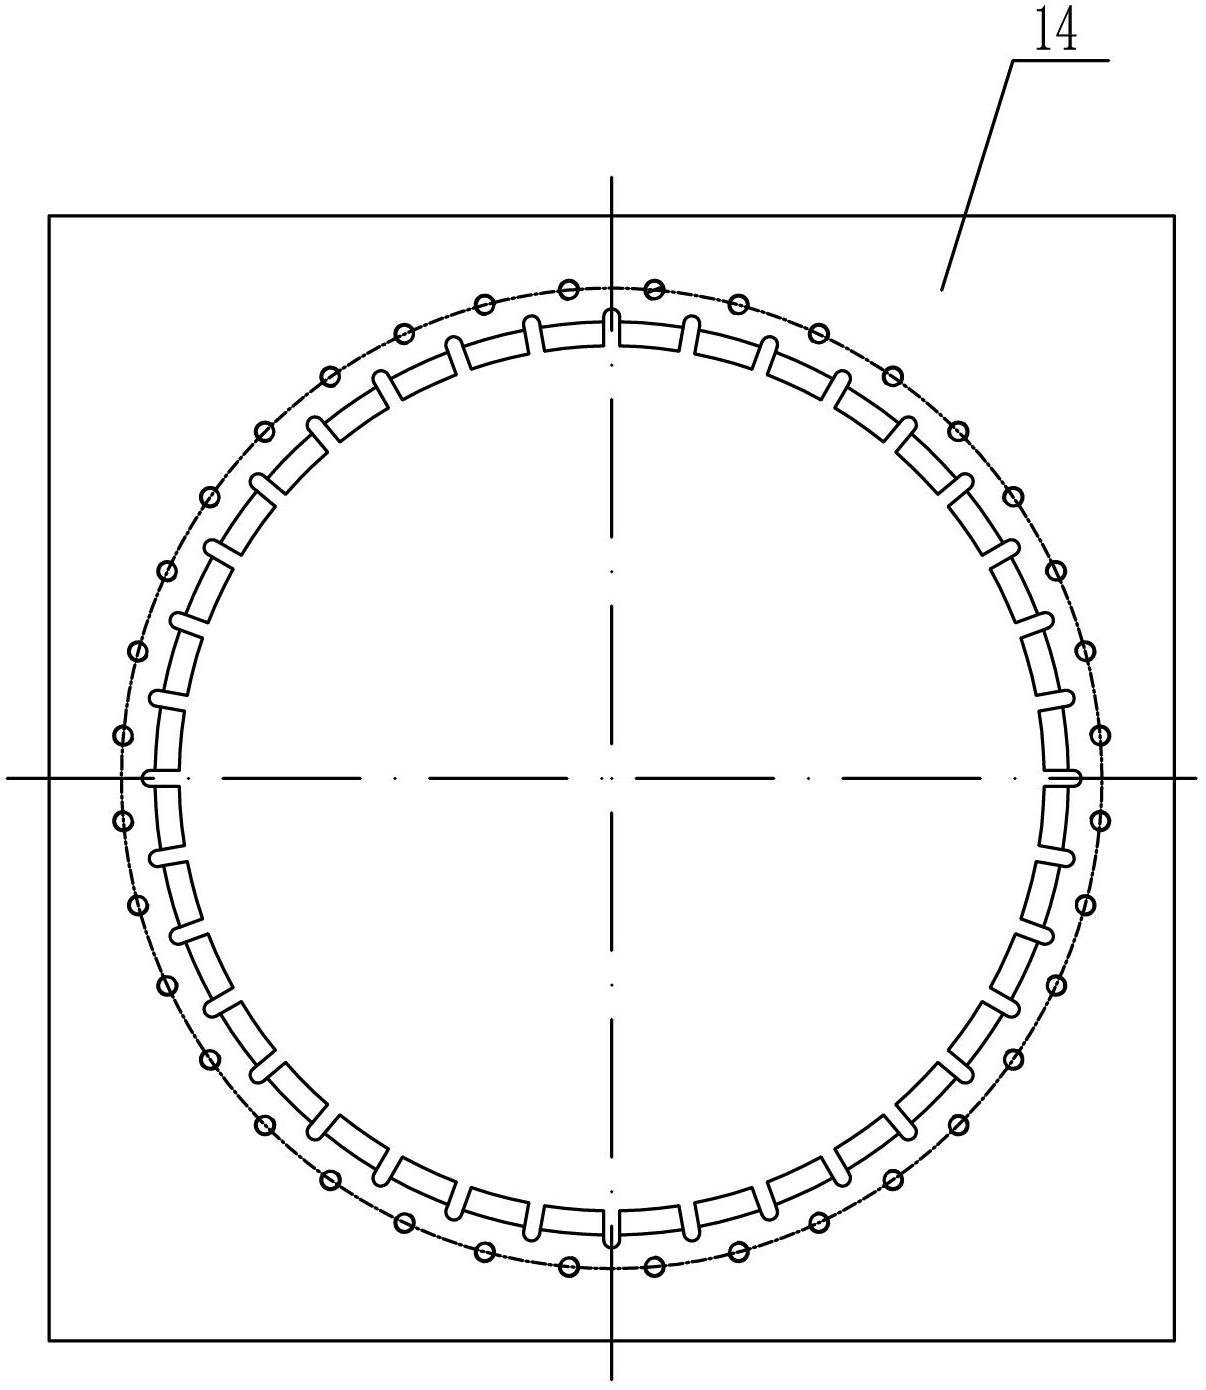 Processing method for inner ring arc section of guide vane